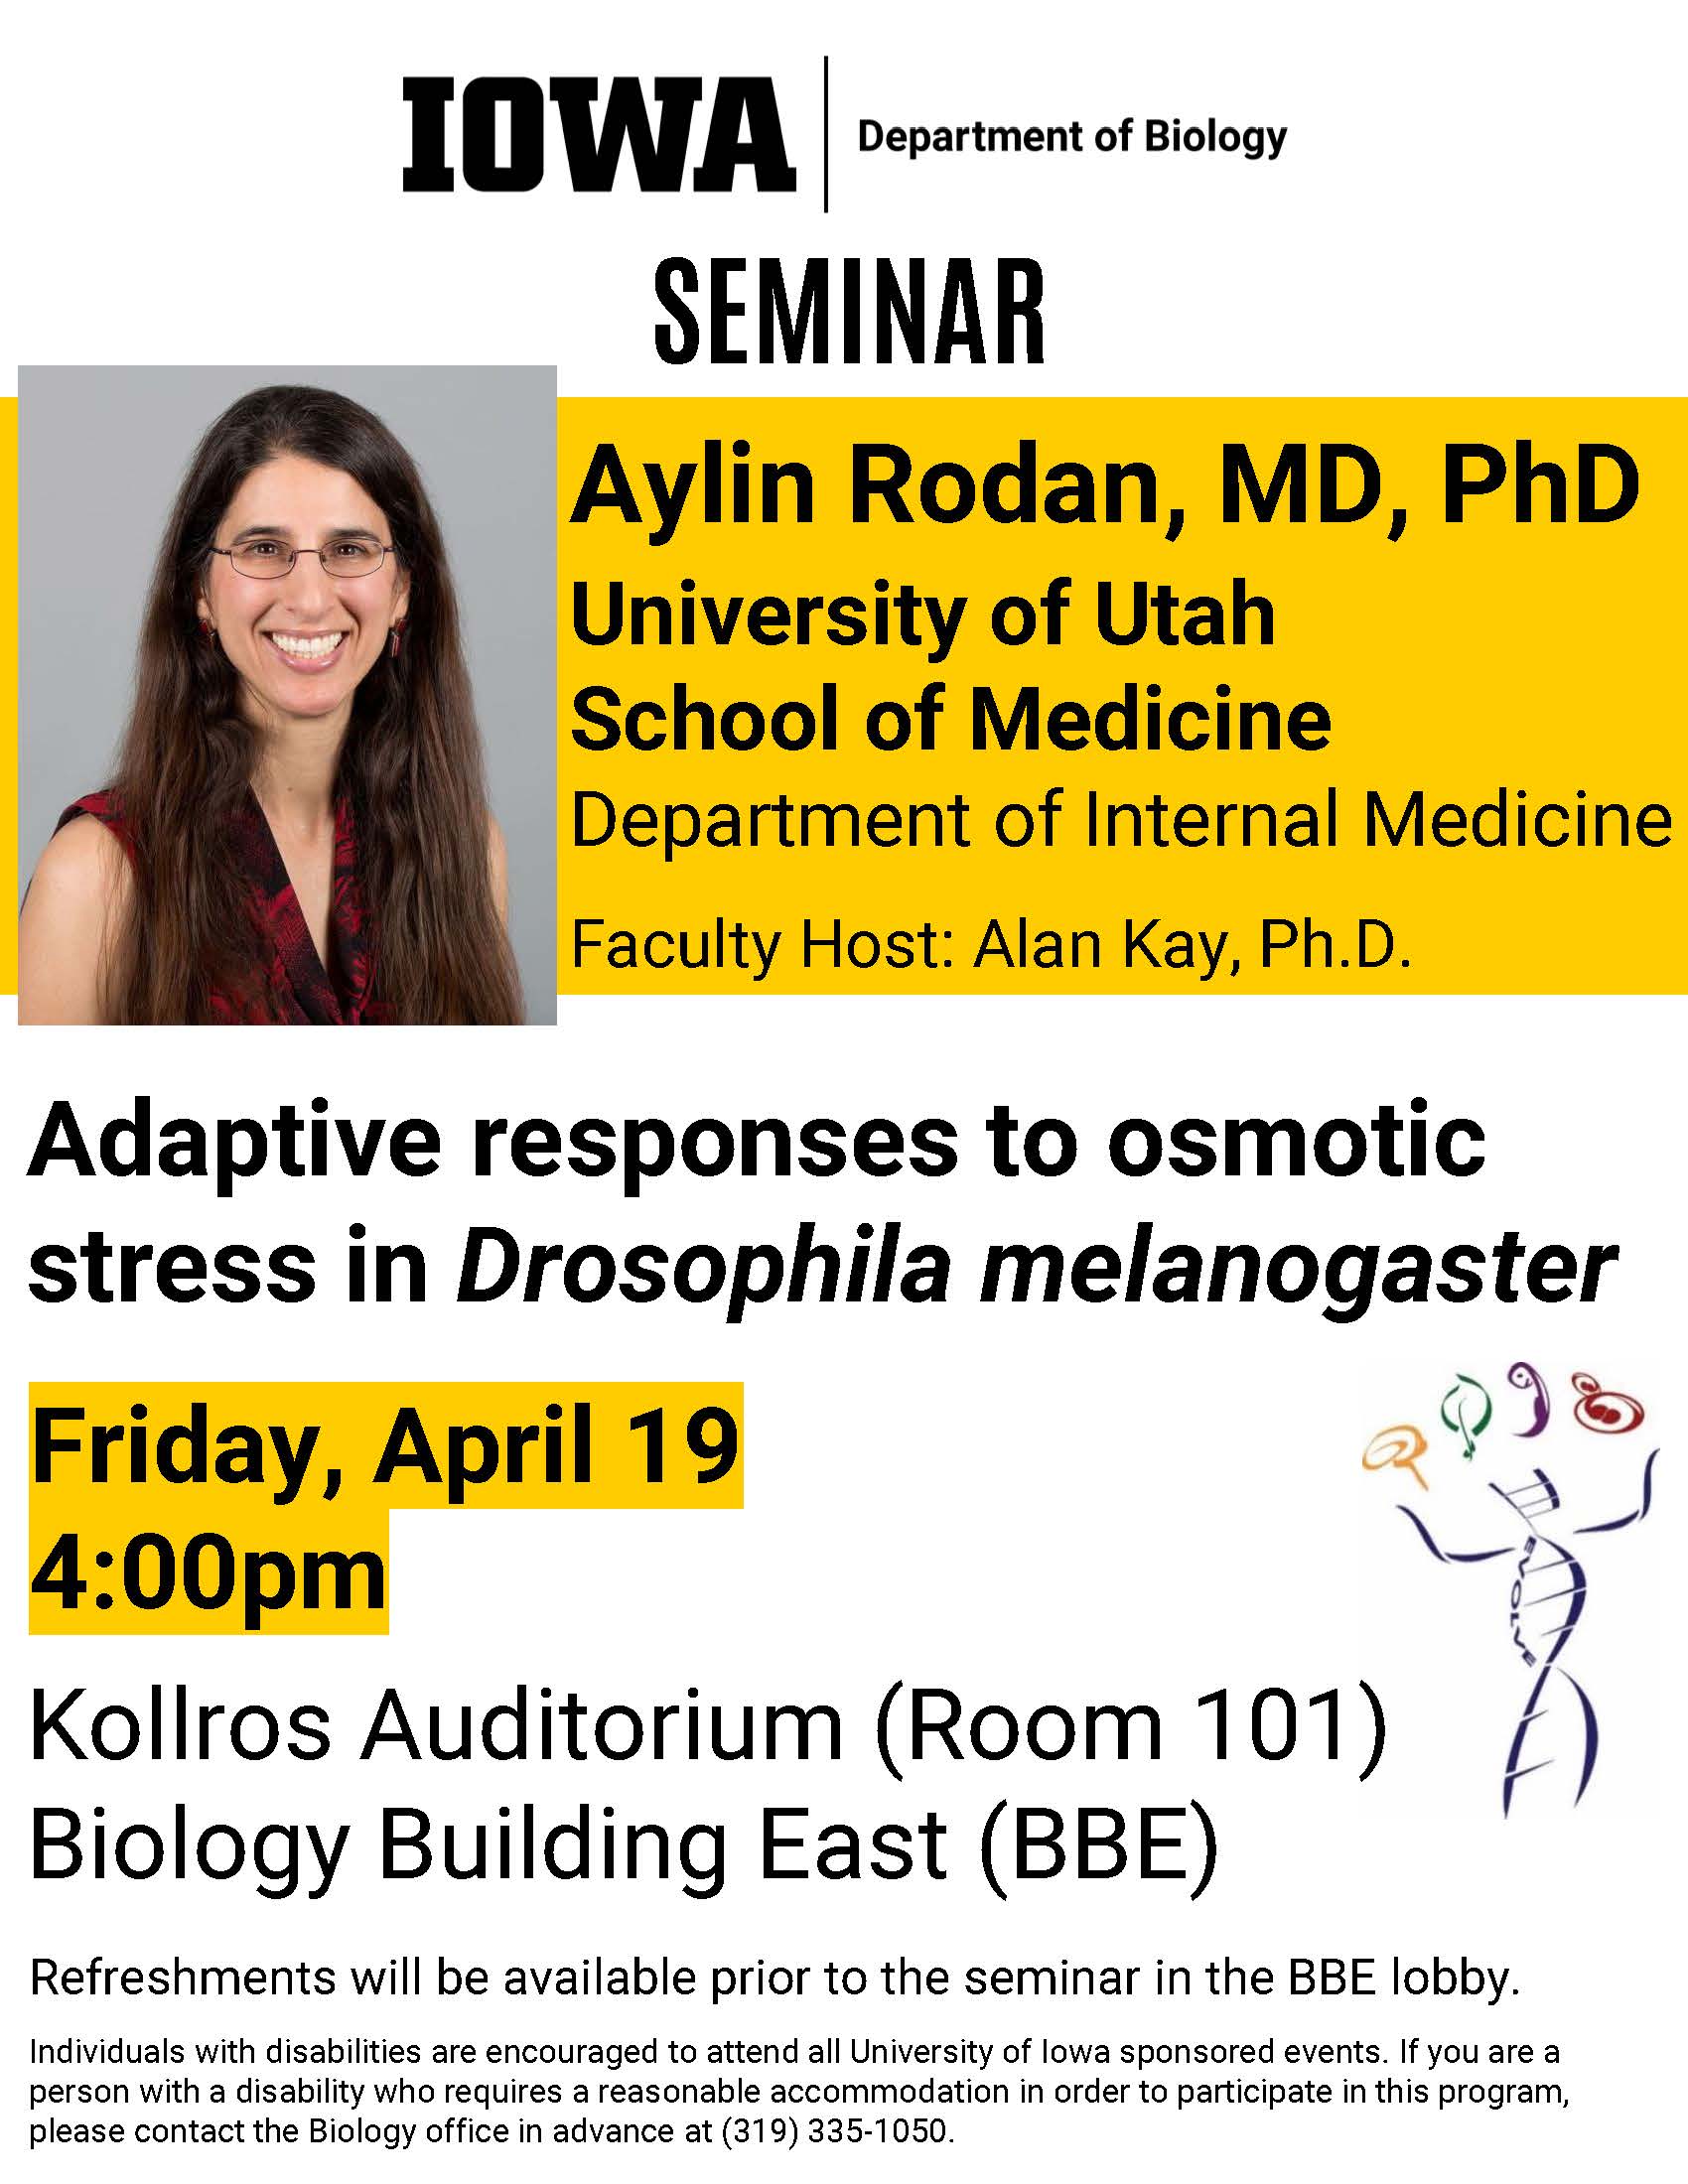 Biology Seminar: "Adaptive responses to osmotic stress in Drosophila melanogaster" promotional image